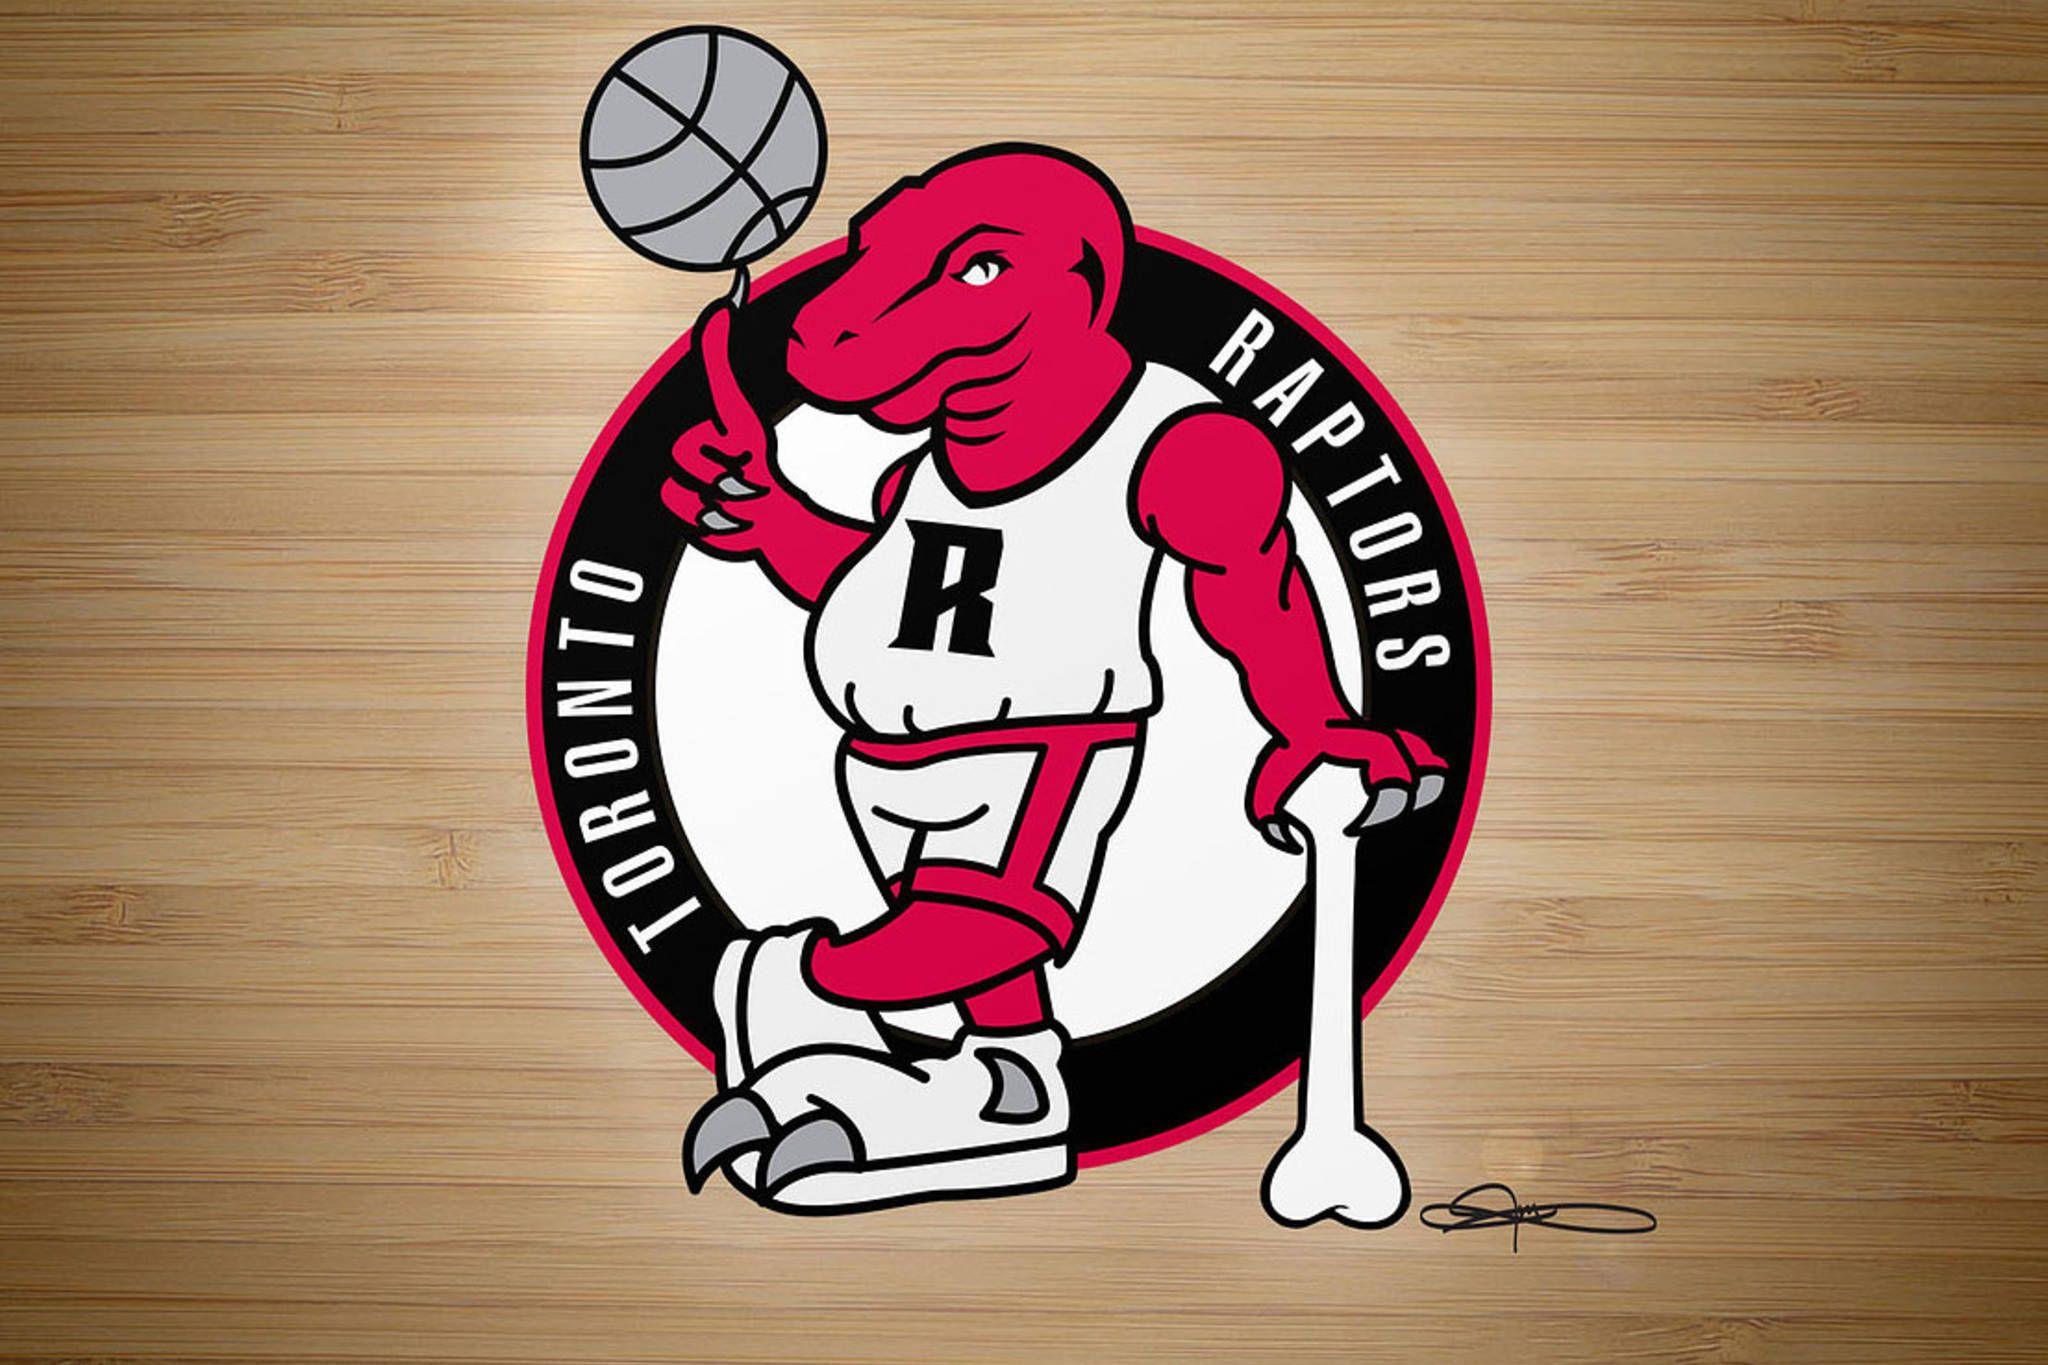 Raptors Logo - Toronto artist redraws every NBA team logo as the Raptors